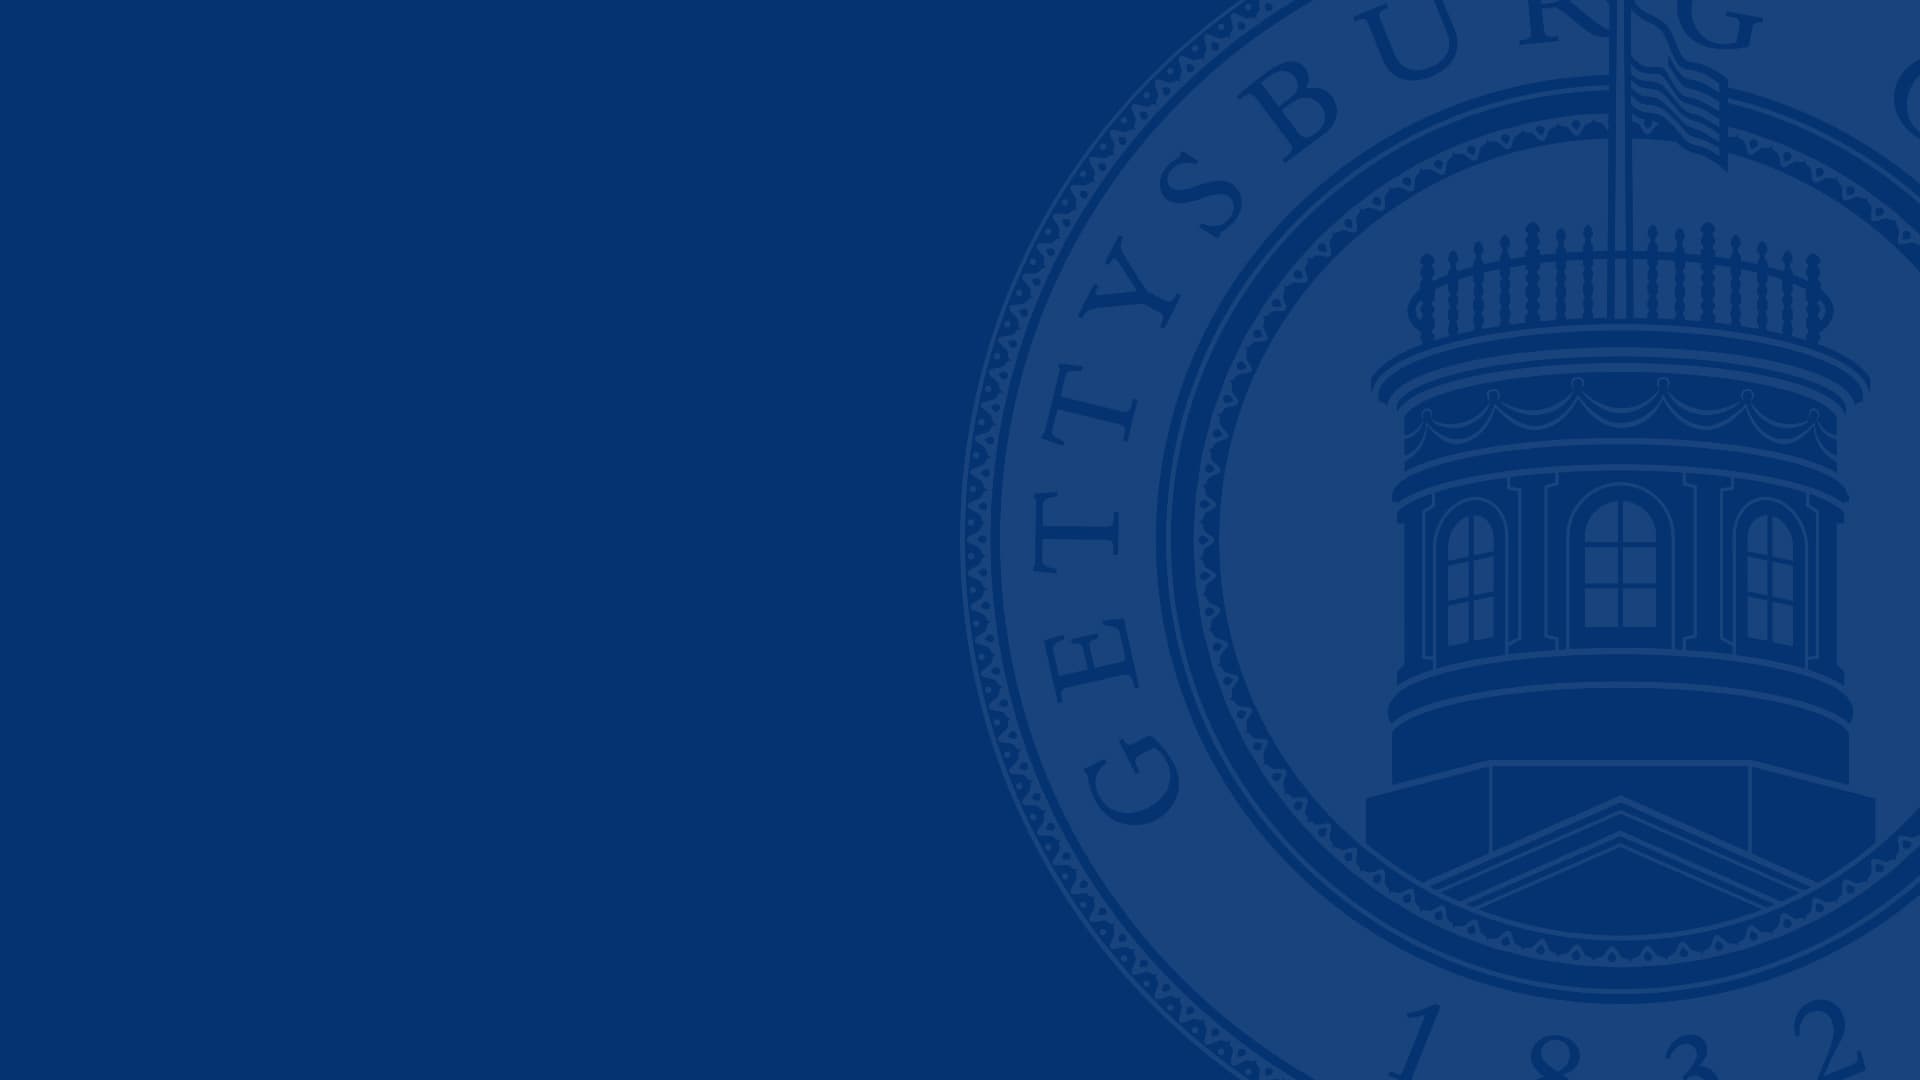 College seal on a dark blue background